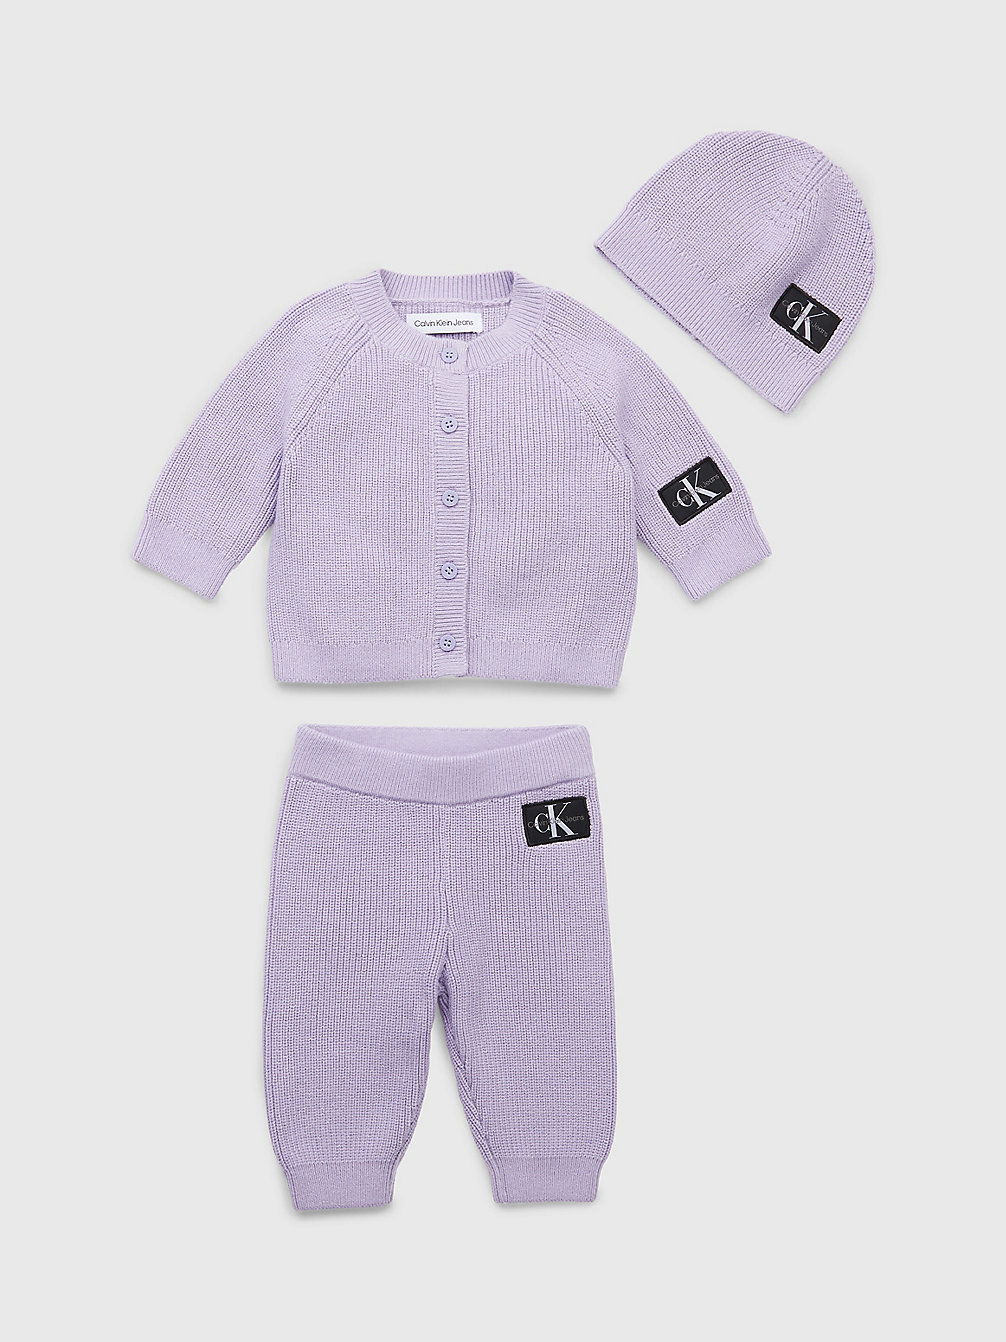 SMOKY LILAC > Подарочный набор спортивного костюма и шапки для новорож > undefined newborn - Calvin Klein